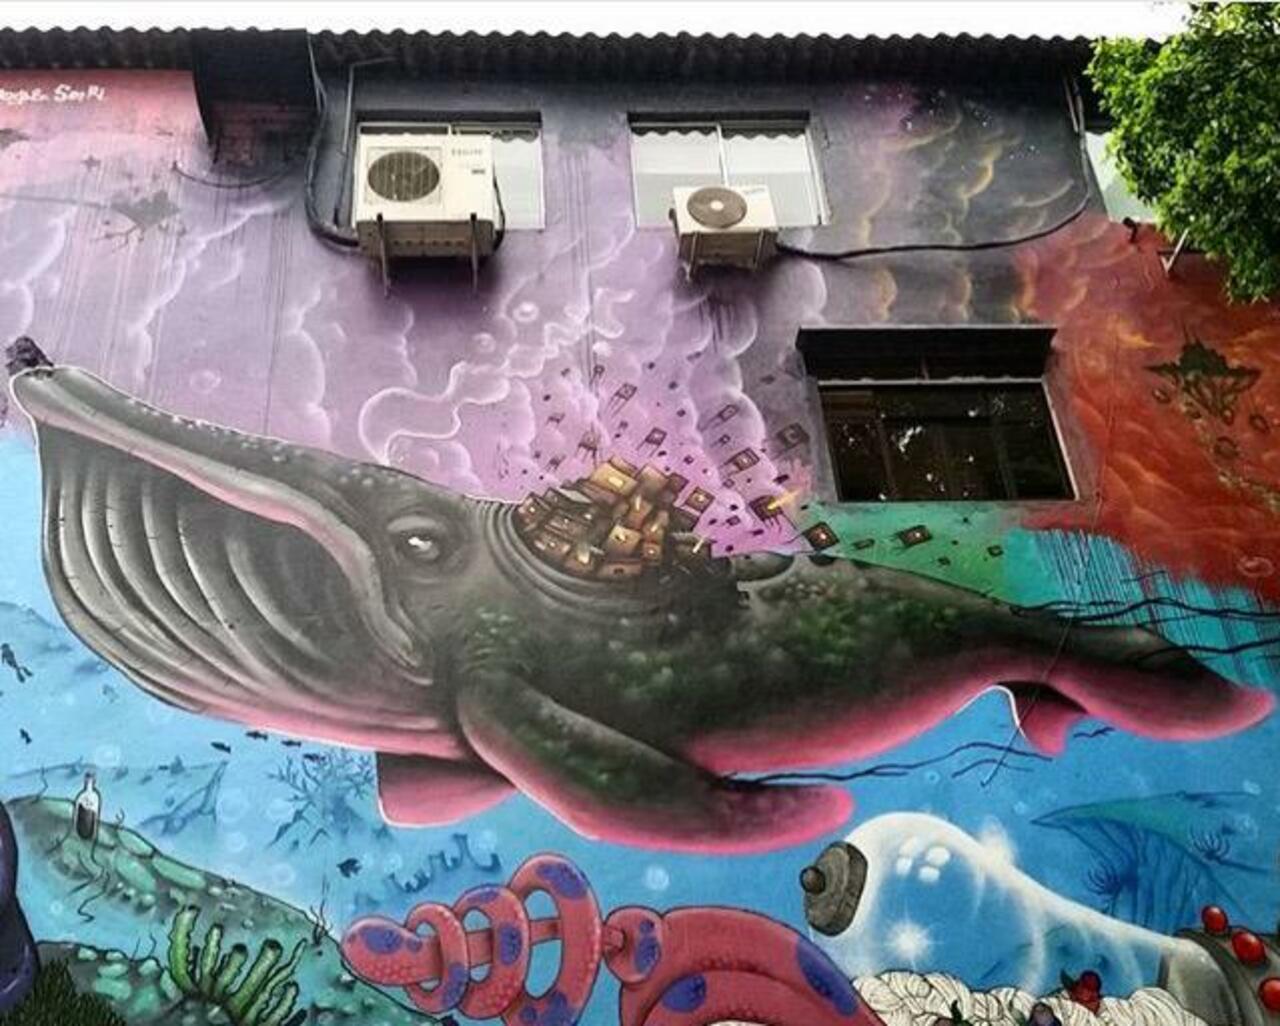 Street Art by joks_johnes Pinheiros, São Paulo 

#art #mural #graffiti #streetart http://t.co/VIg6NhiZGM